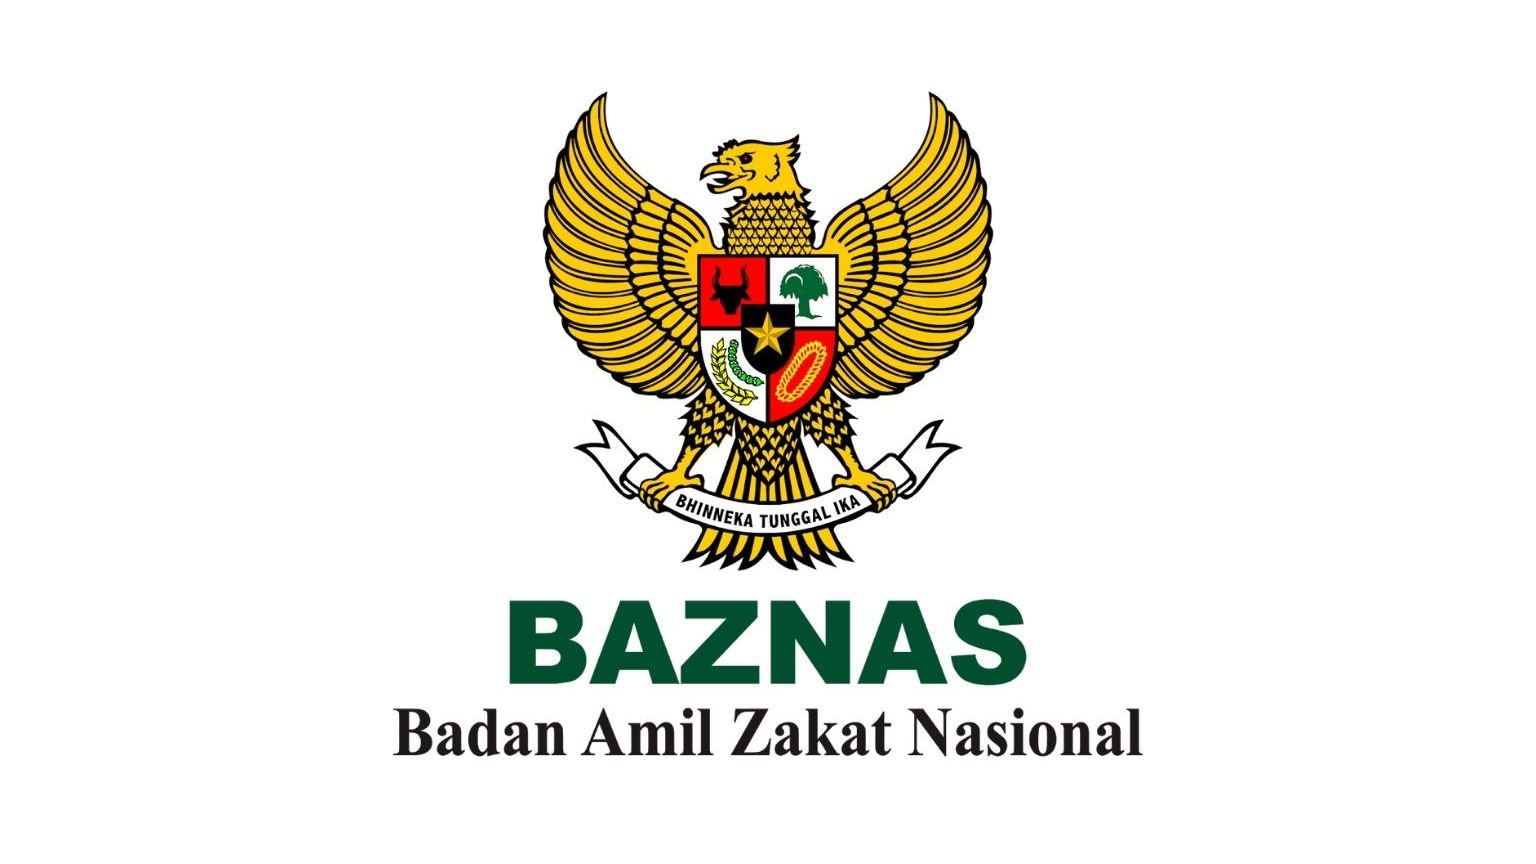 Baznas RI menginstruksikan jajaran Baznas di daerah untuk berperan serta meringankan korban gempa di Turki.